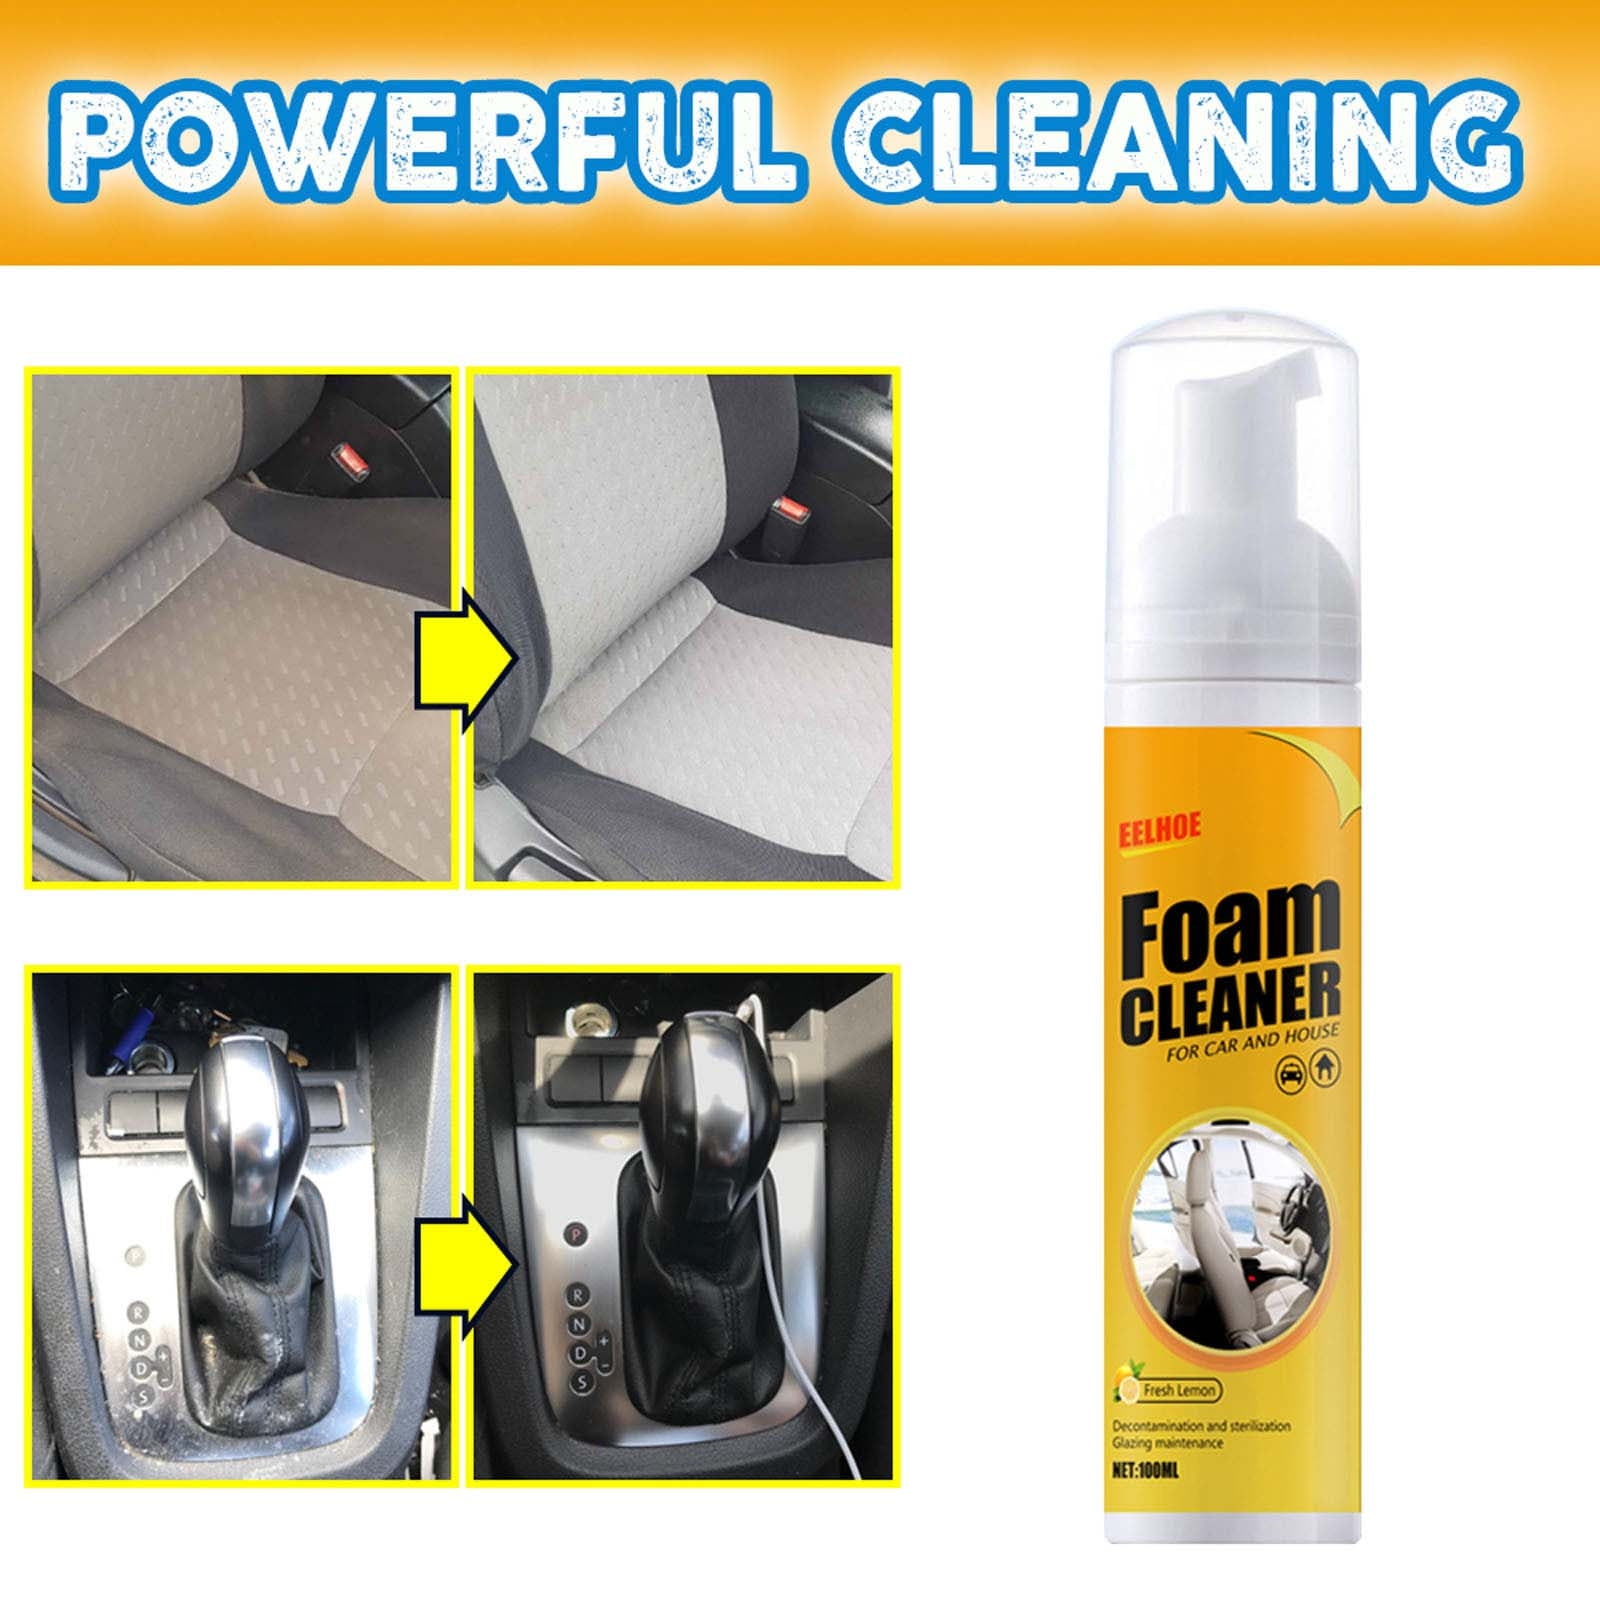 GDSAFS Multifunctional Car Foam Cleaner, Losa Foam Cleaner, Multi